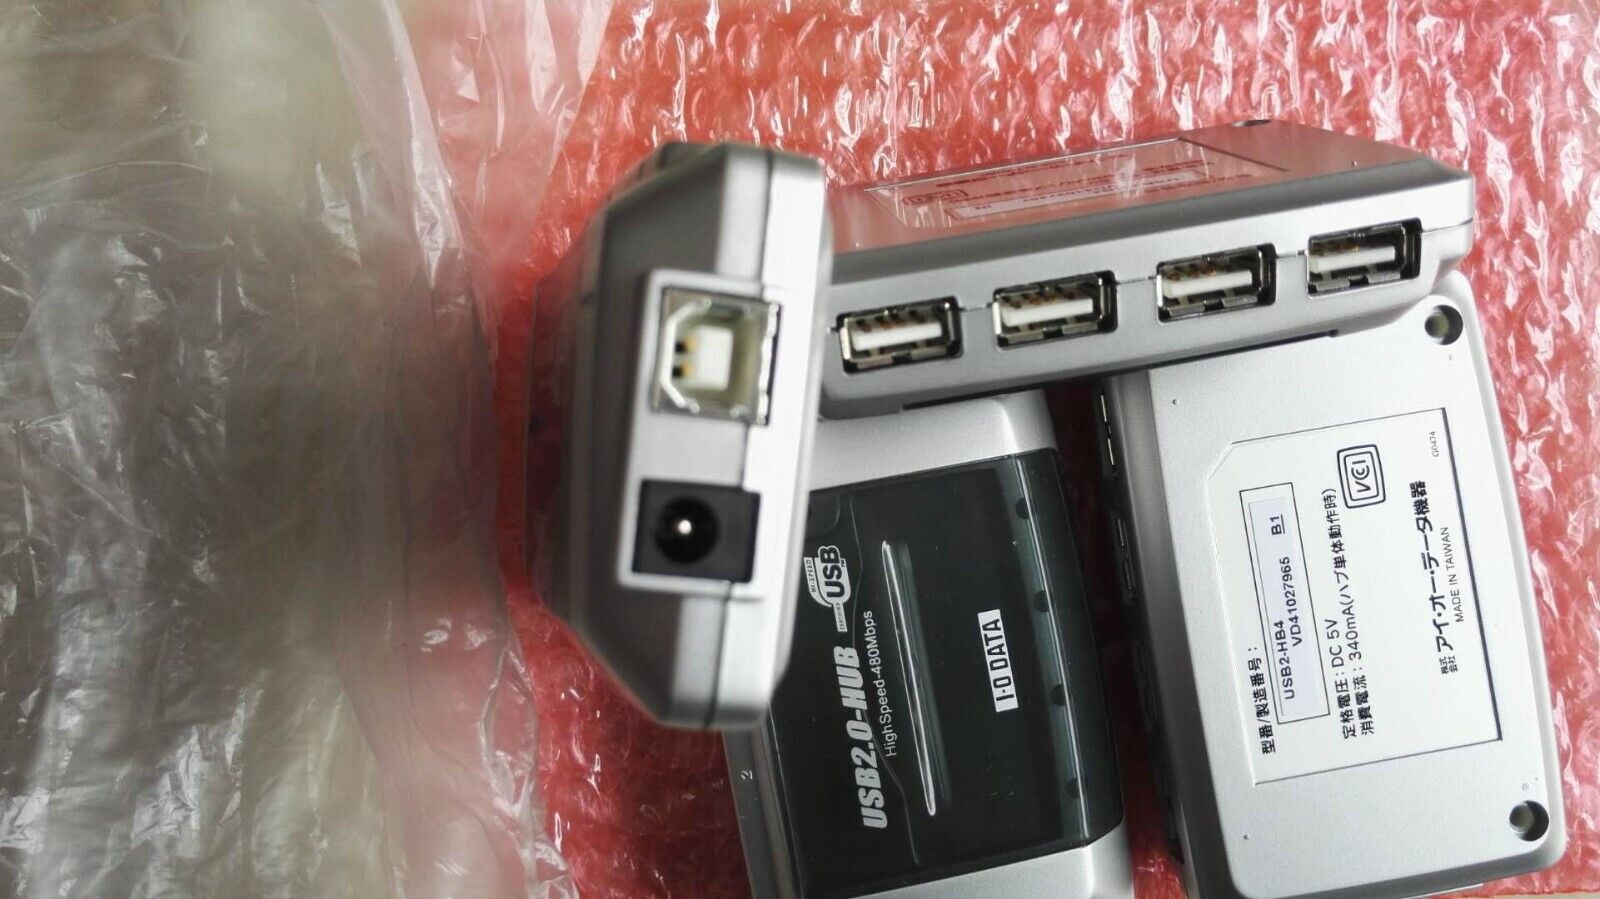 USB-HB4 IO DATA USB 2.0 4 port hub USB2.0-HUB high speed 480mbps